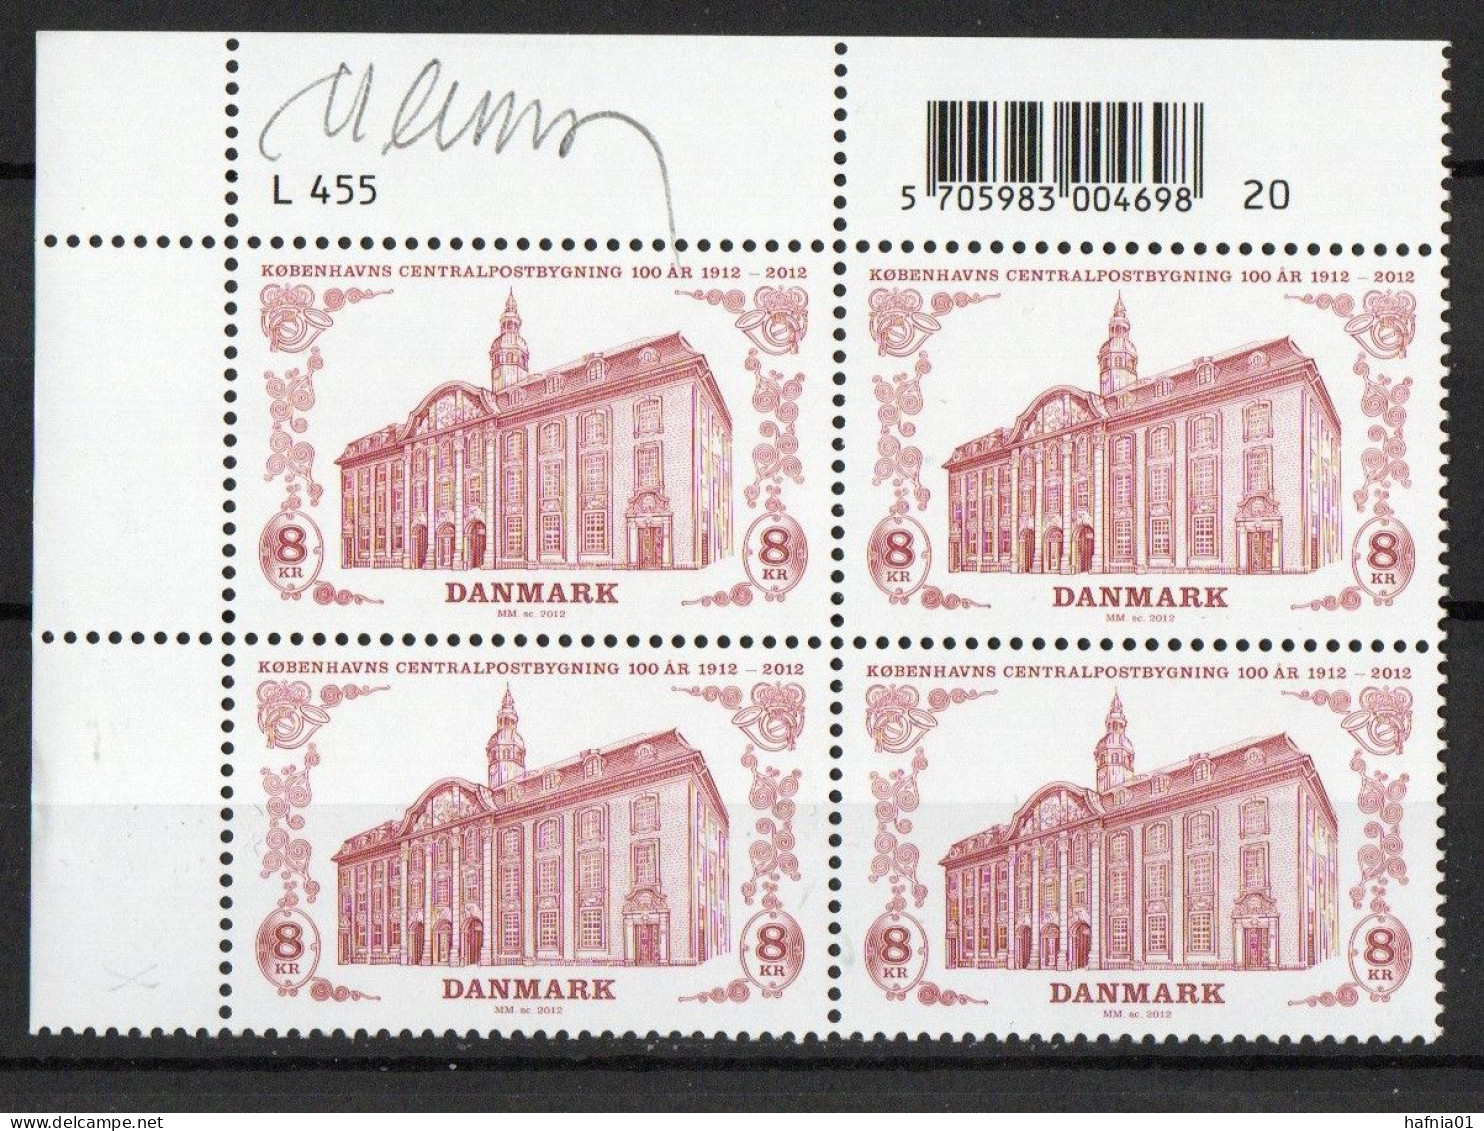 Martin Mörck. Denmark 2012. Main Post Office, Copenhagen. Michel 1718 Plate Block. MNH. Signed. - Blocks & Kleinbögen